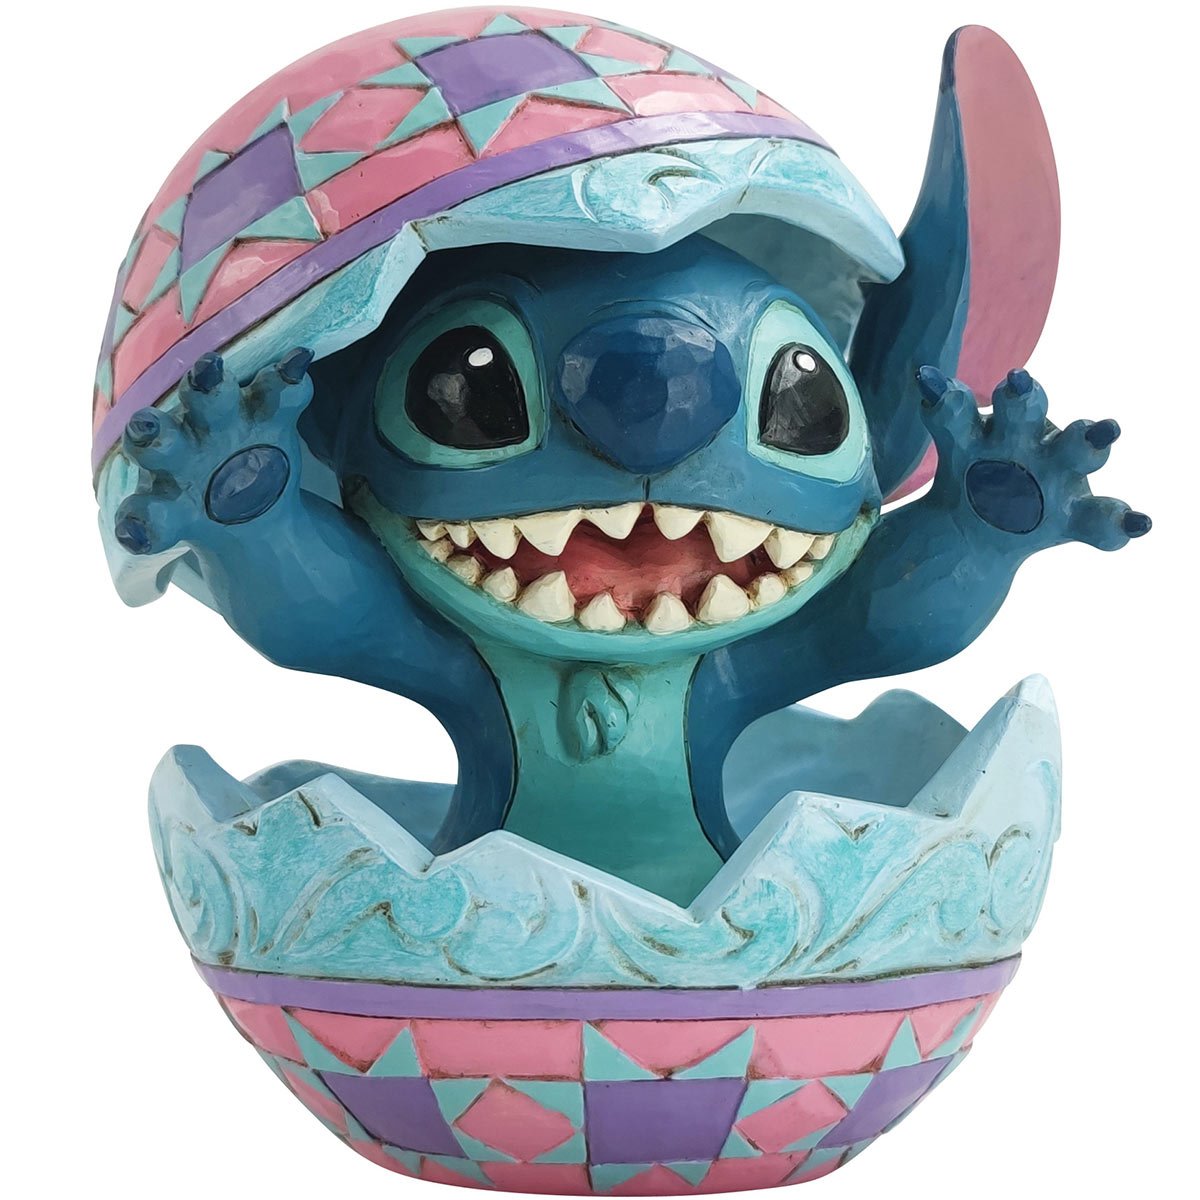 Disney's Stitch Pop Art Figurine designed by Romero Britto